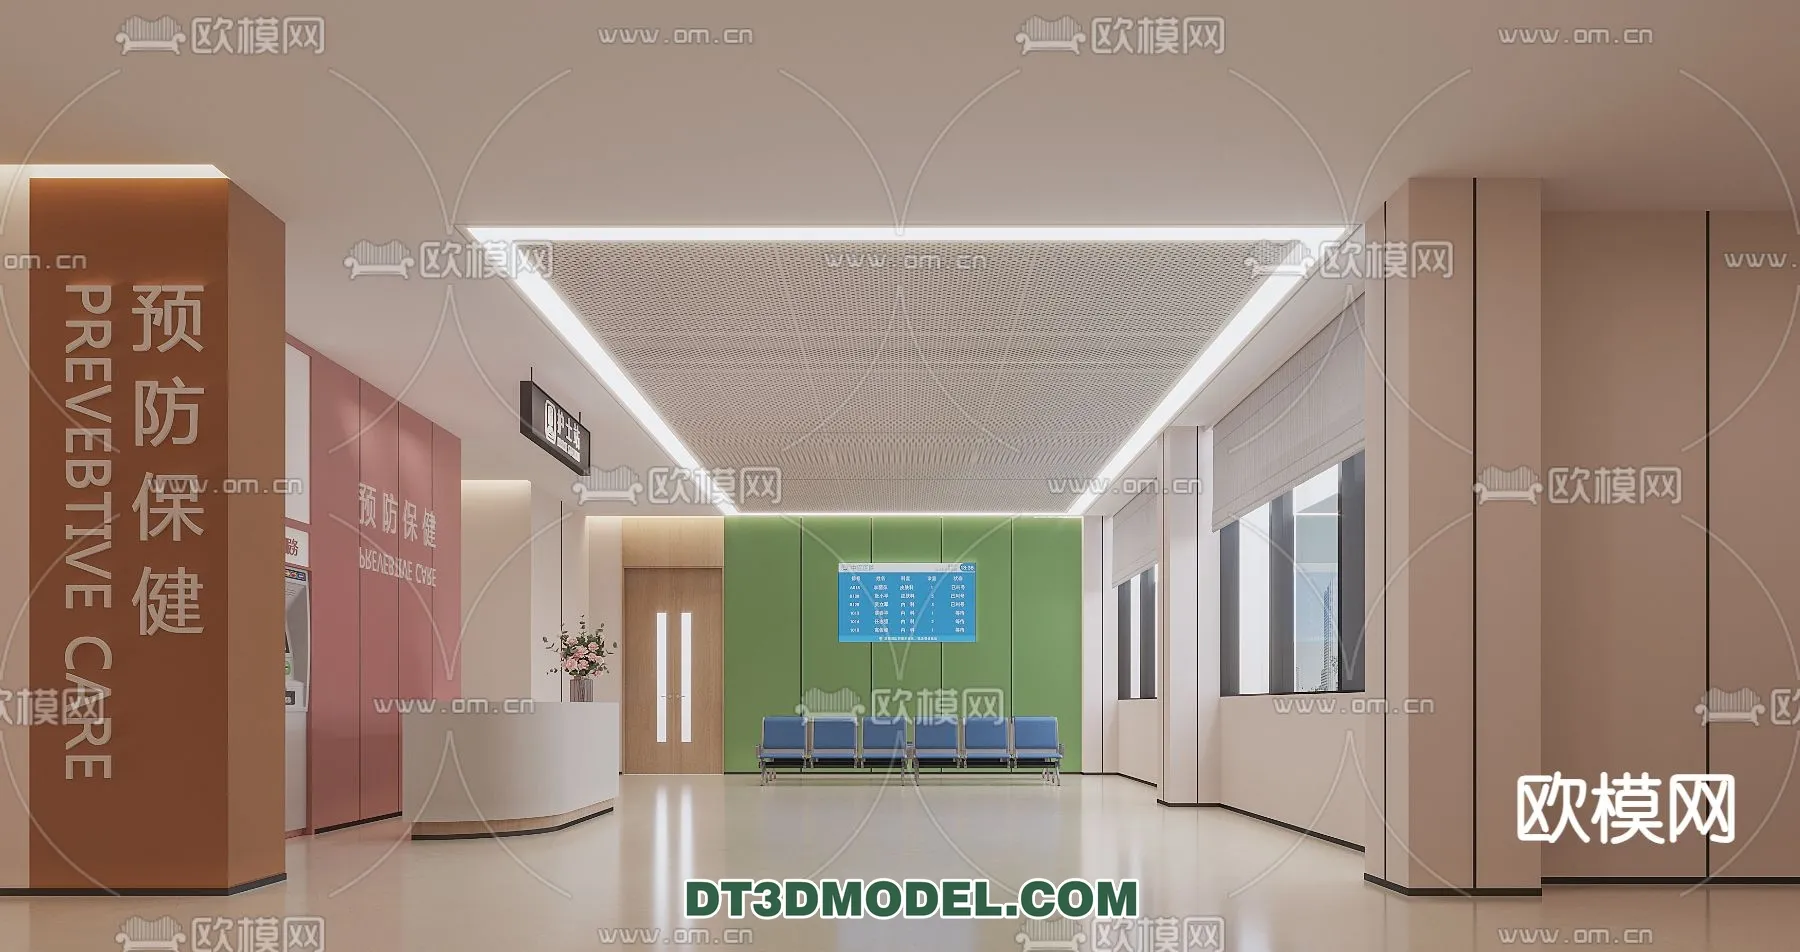 HOSPITAL 3D SCENES – MODERN – 0190